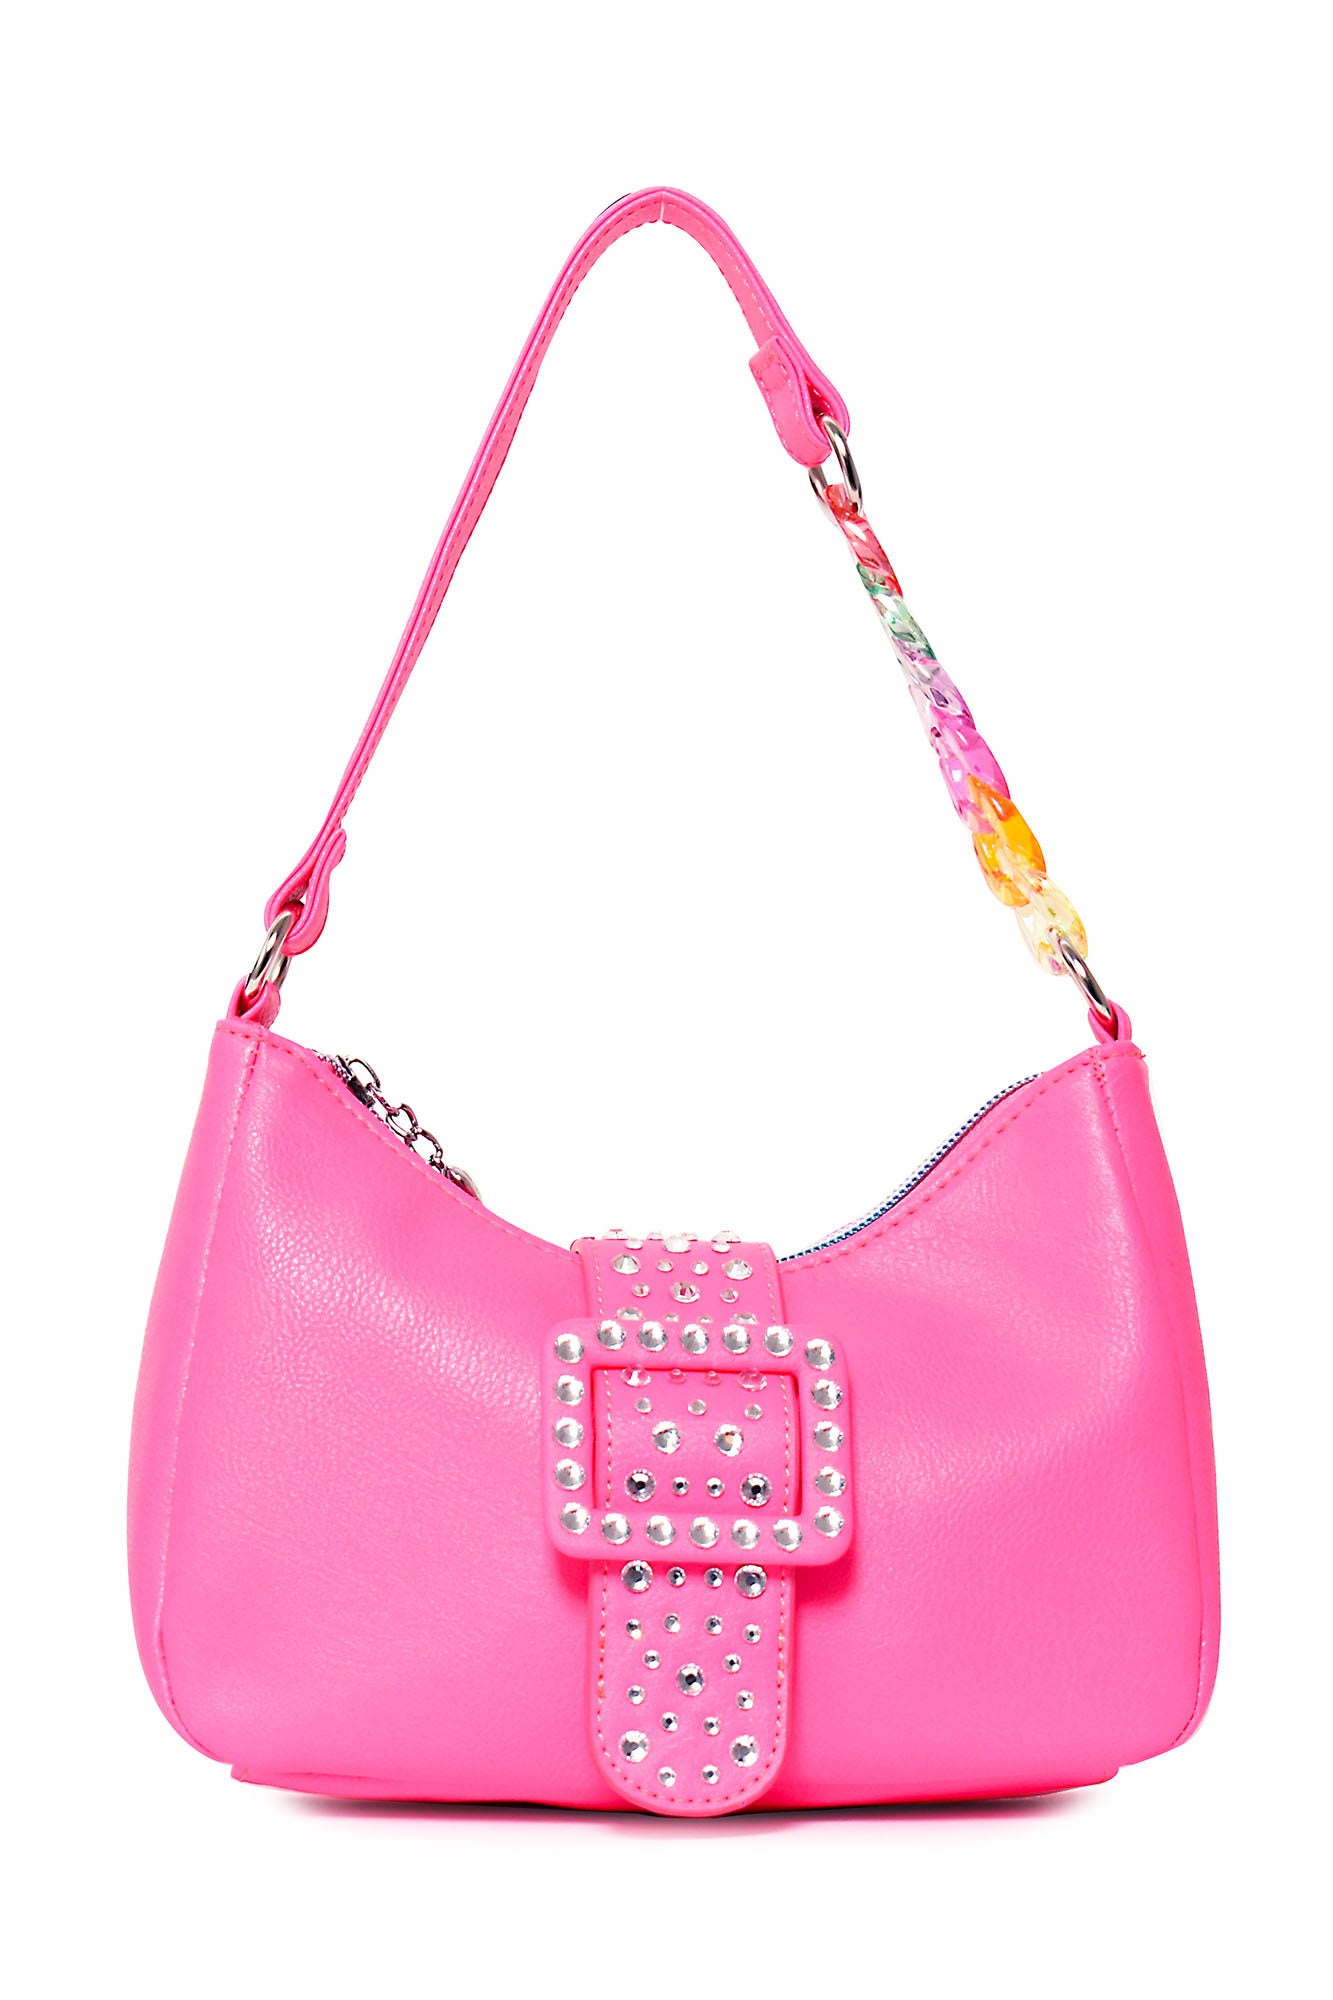 Baby Pink Leather Slouchy Hobo Handbag - BeautifulBagsEtc